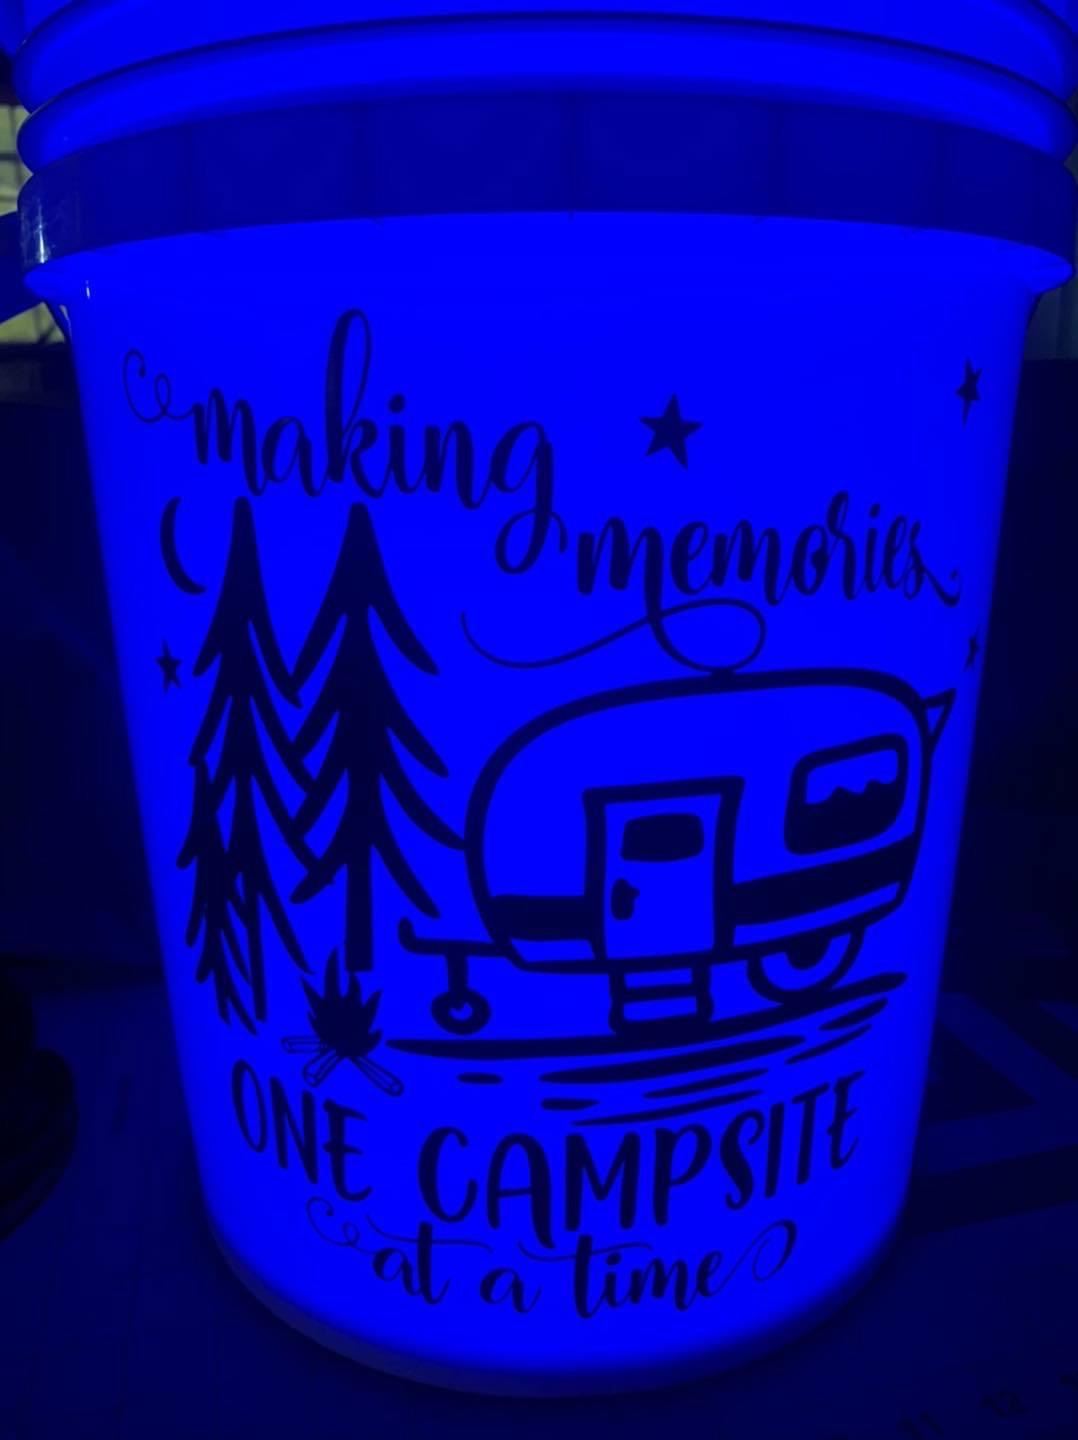 Camping Bucket-5 Gallon